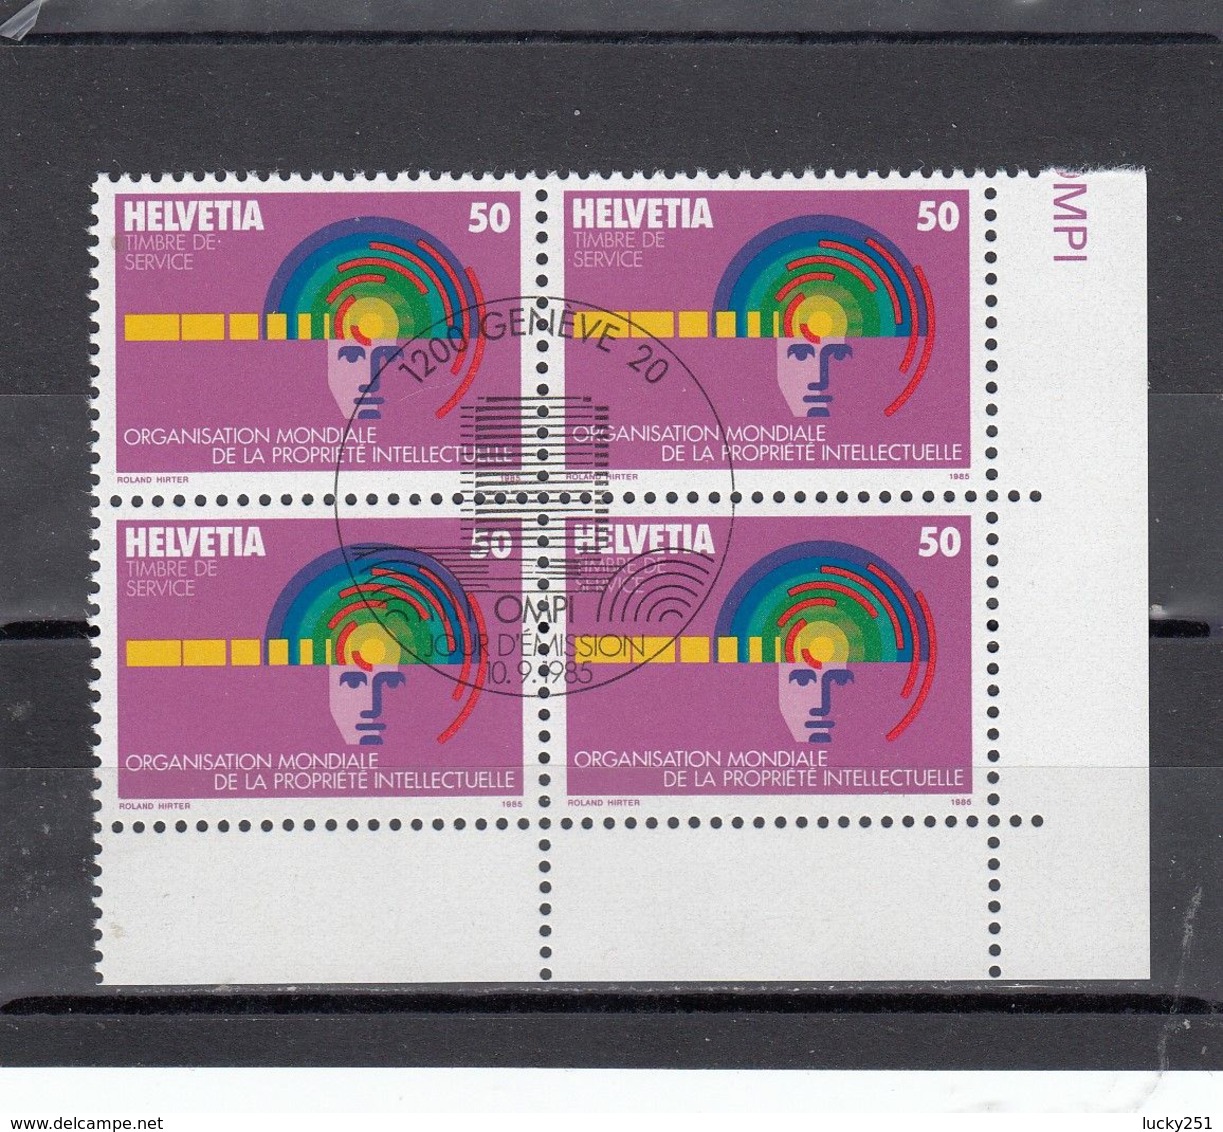 Suisse - Année 1985 - Service - Oblitéré - N°Zumstein 5 - OMPI - Sujets Symboliques - Dienstzegels